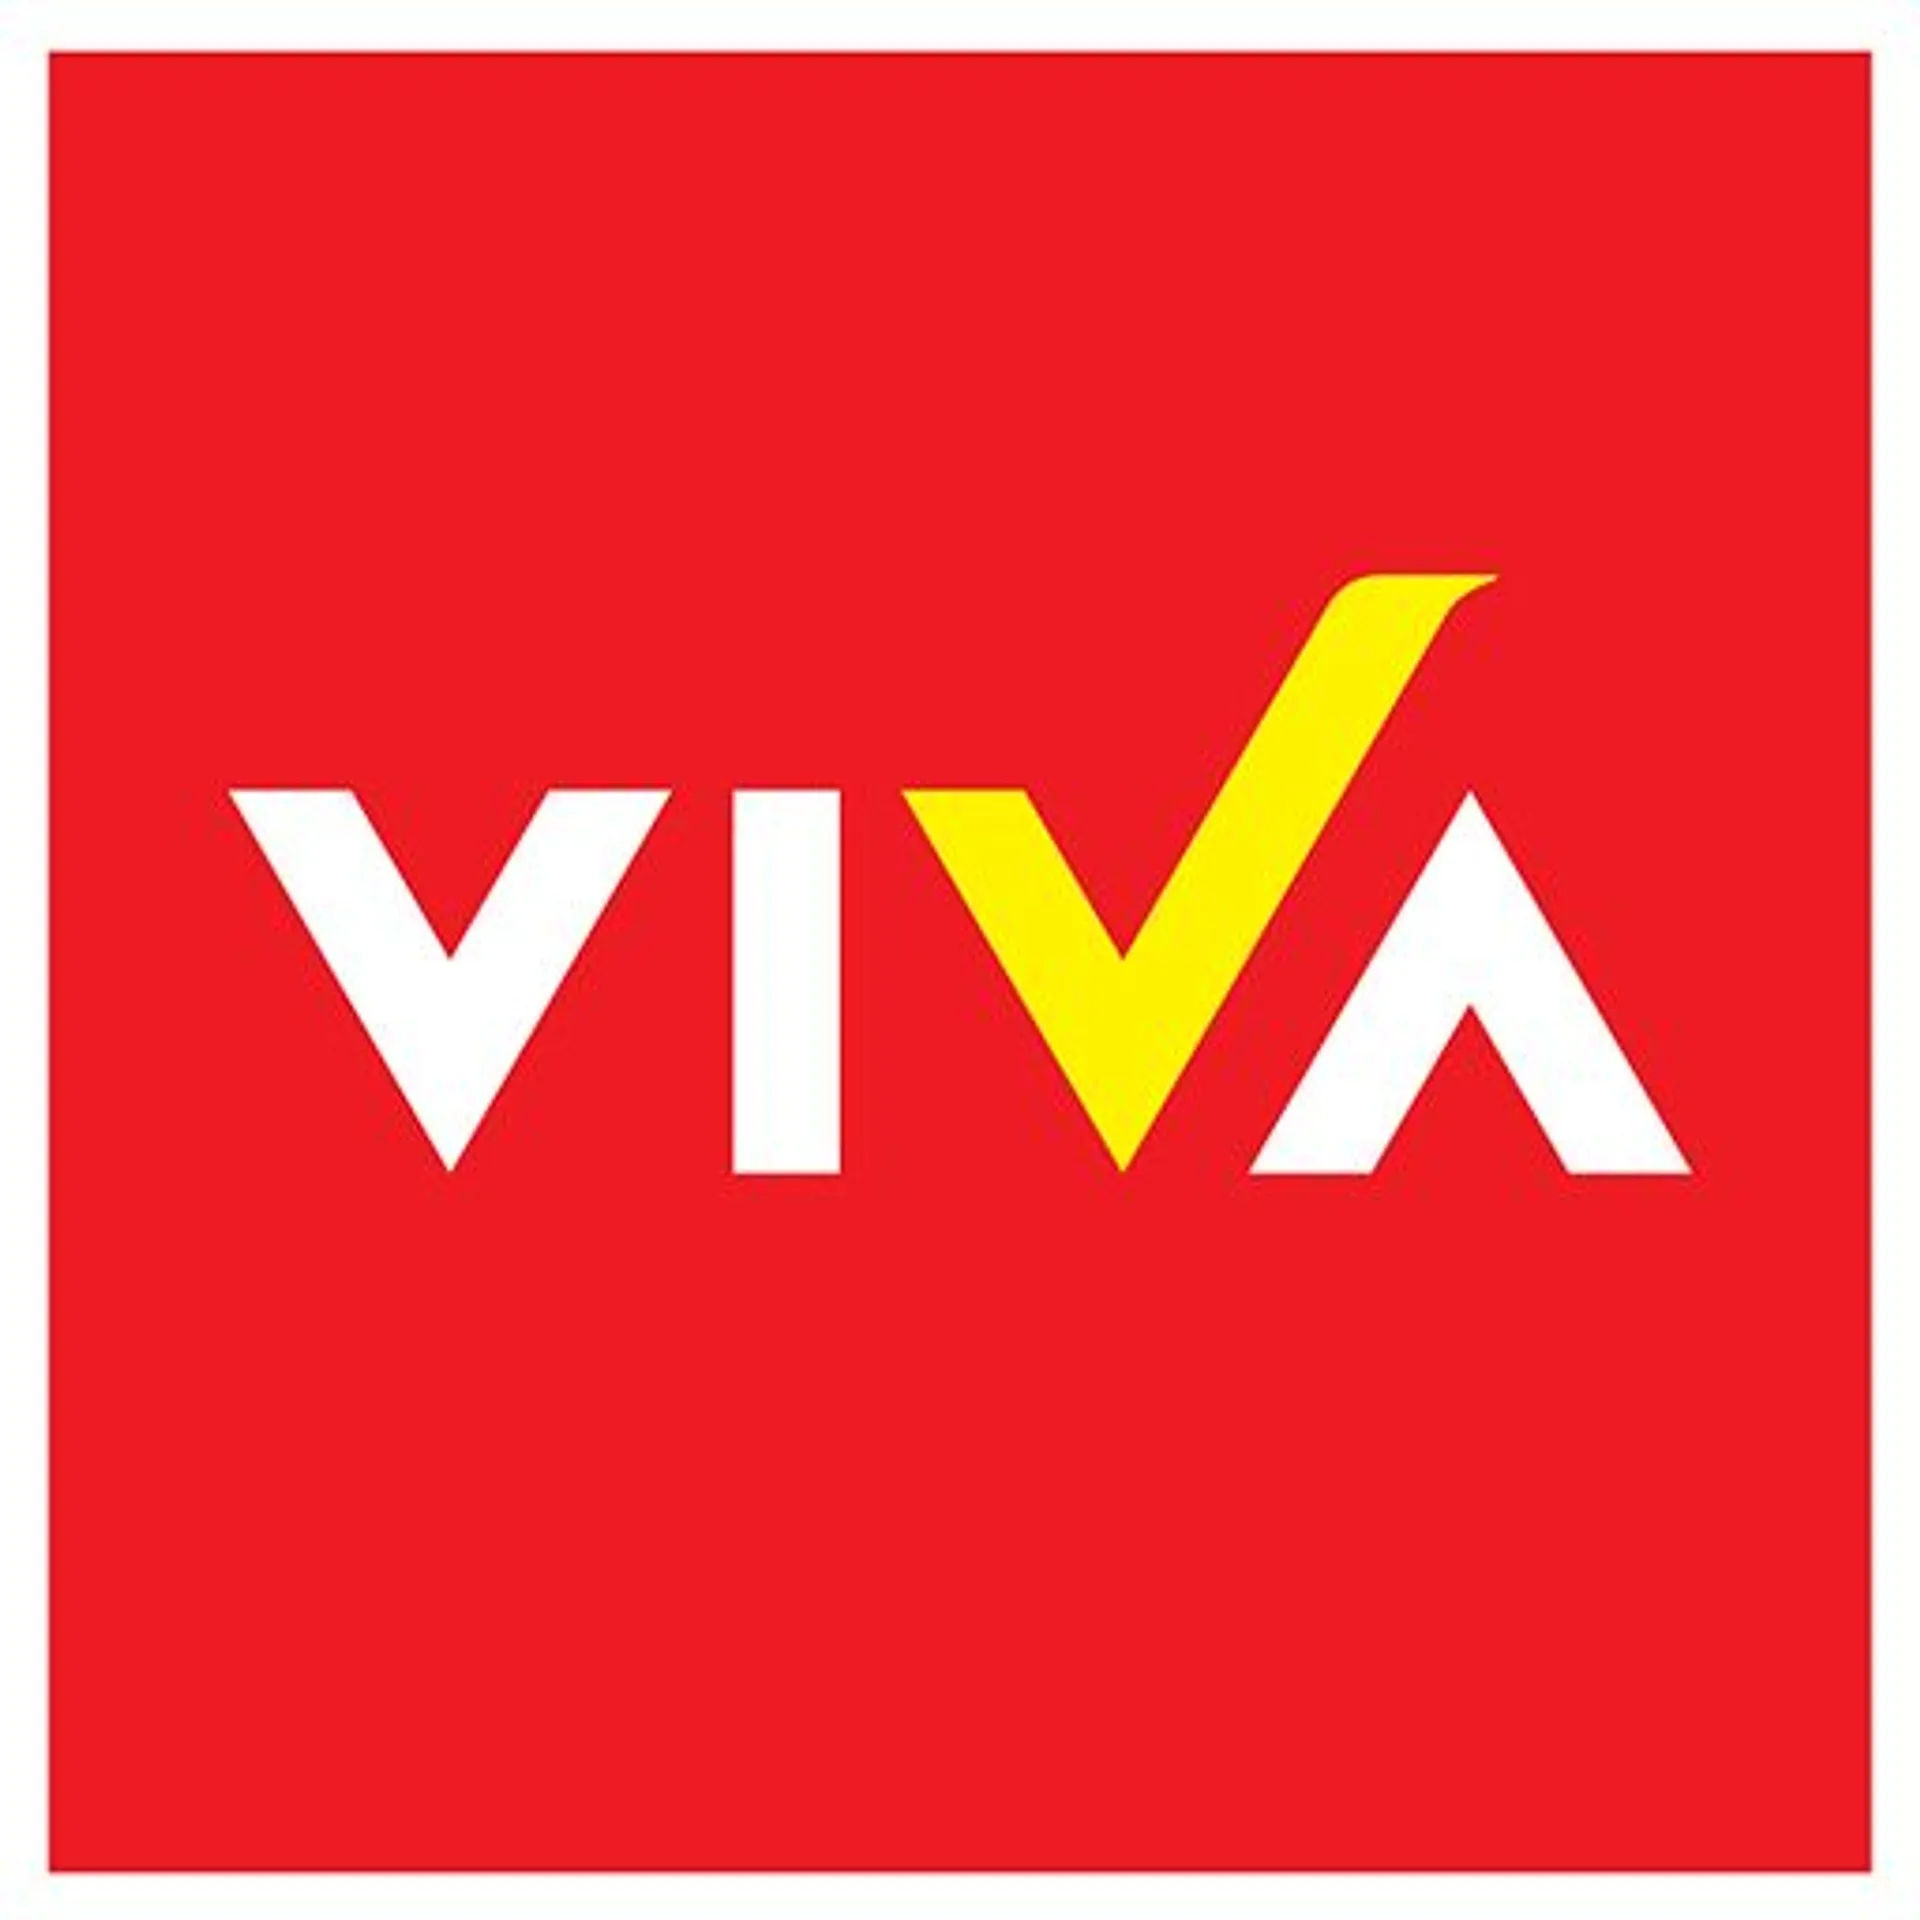 VIVA logo. Current catalogue